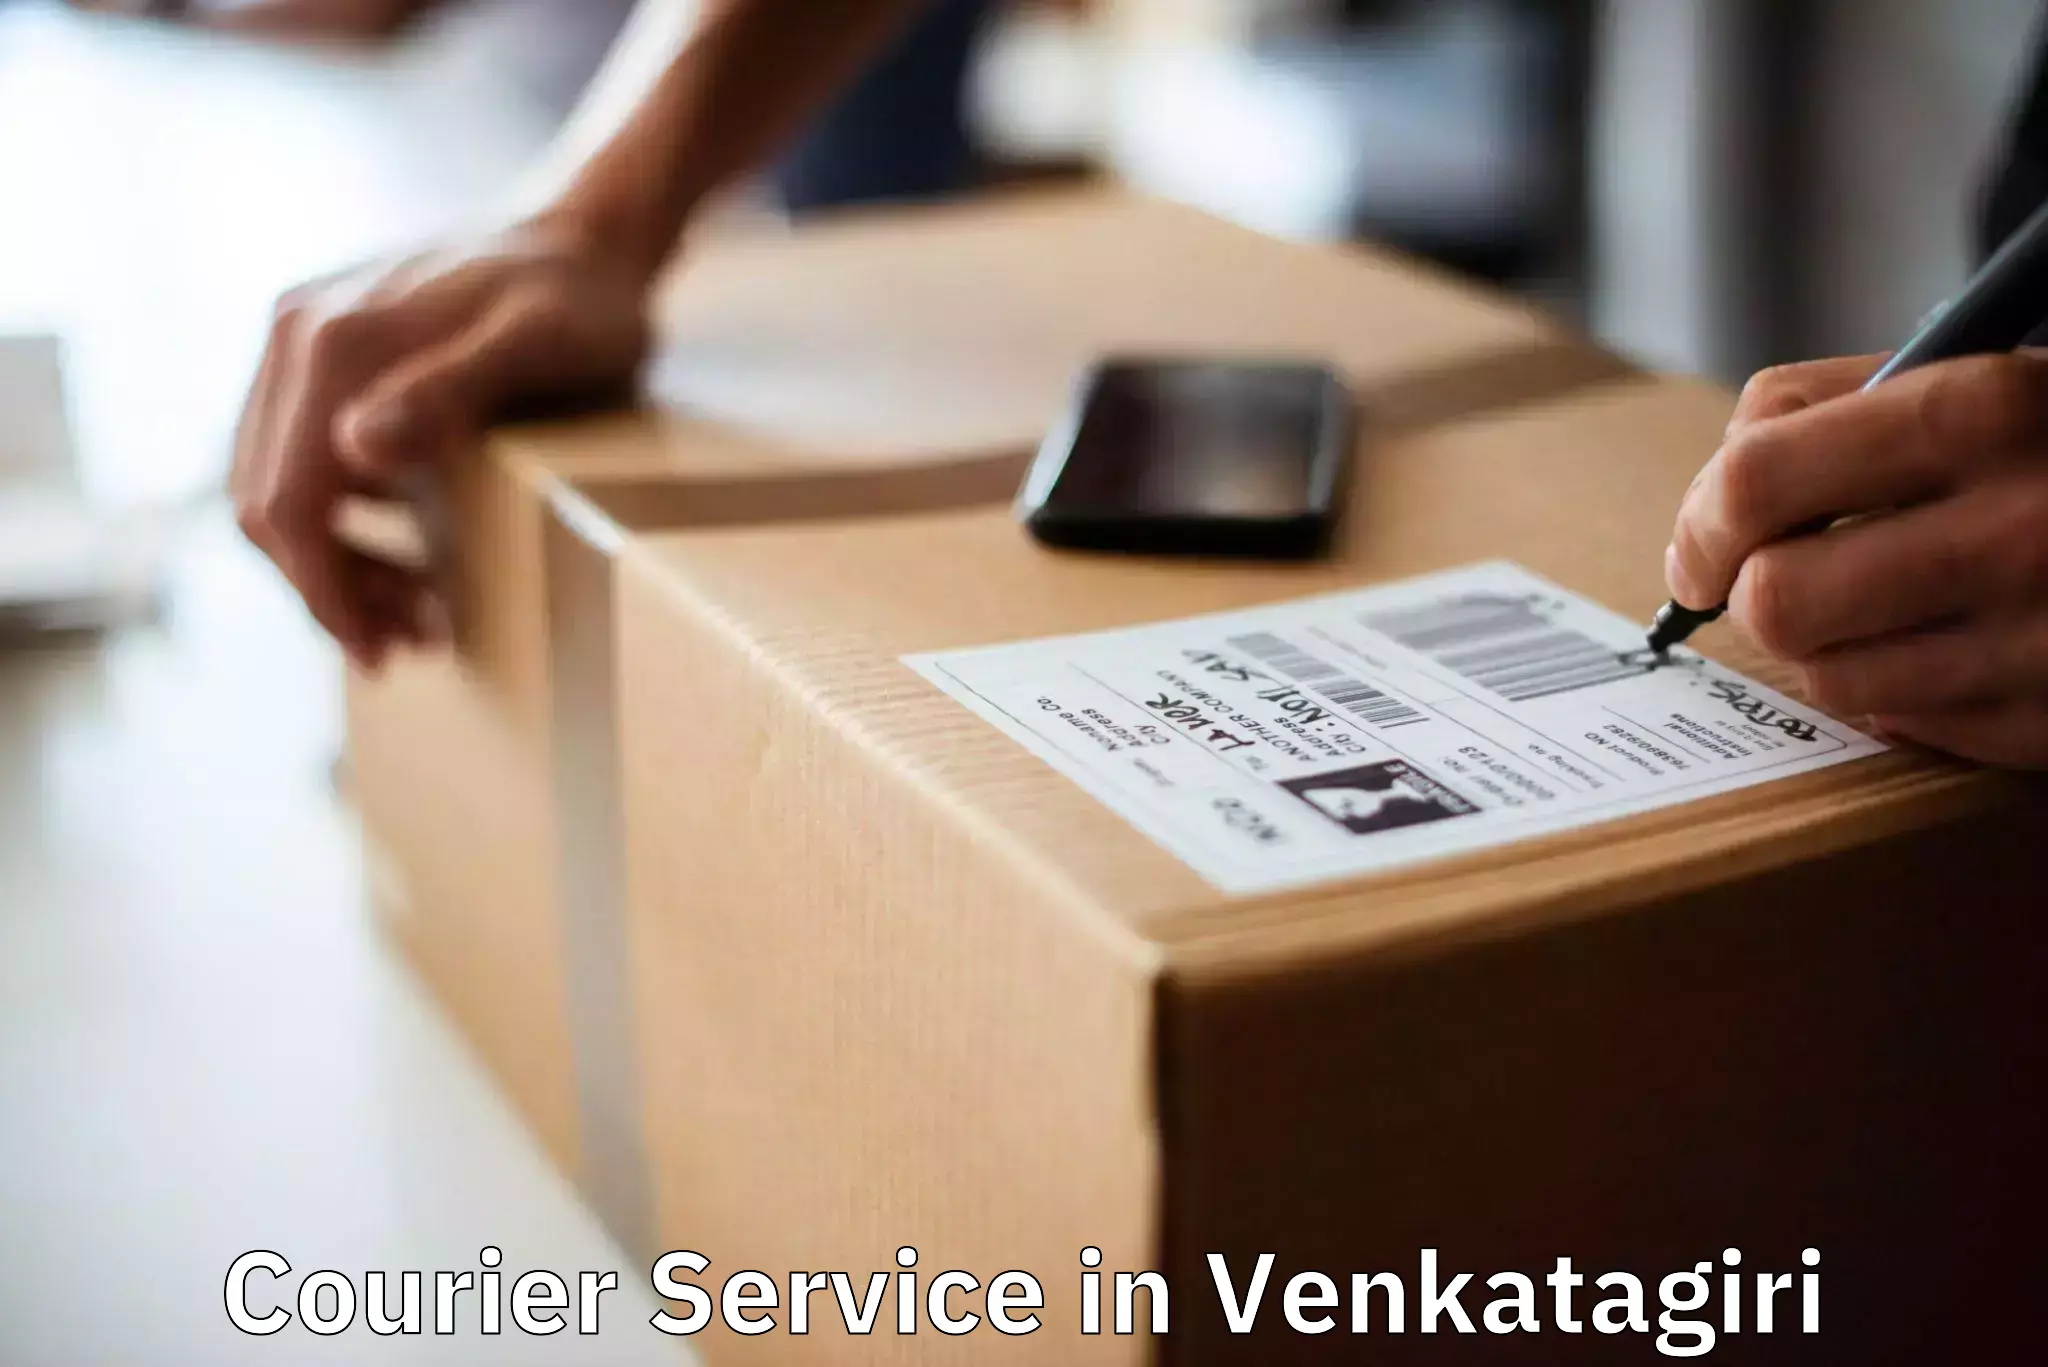 Parcel handling and care in Venkatagiri